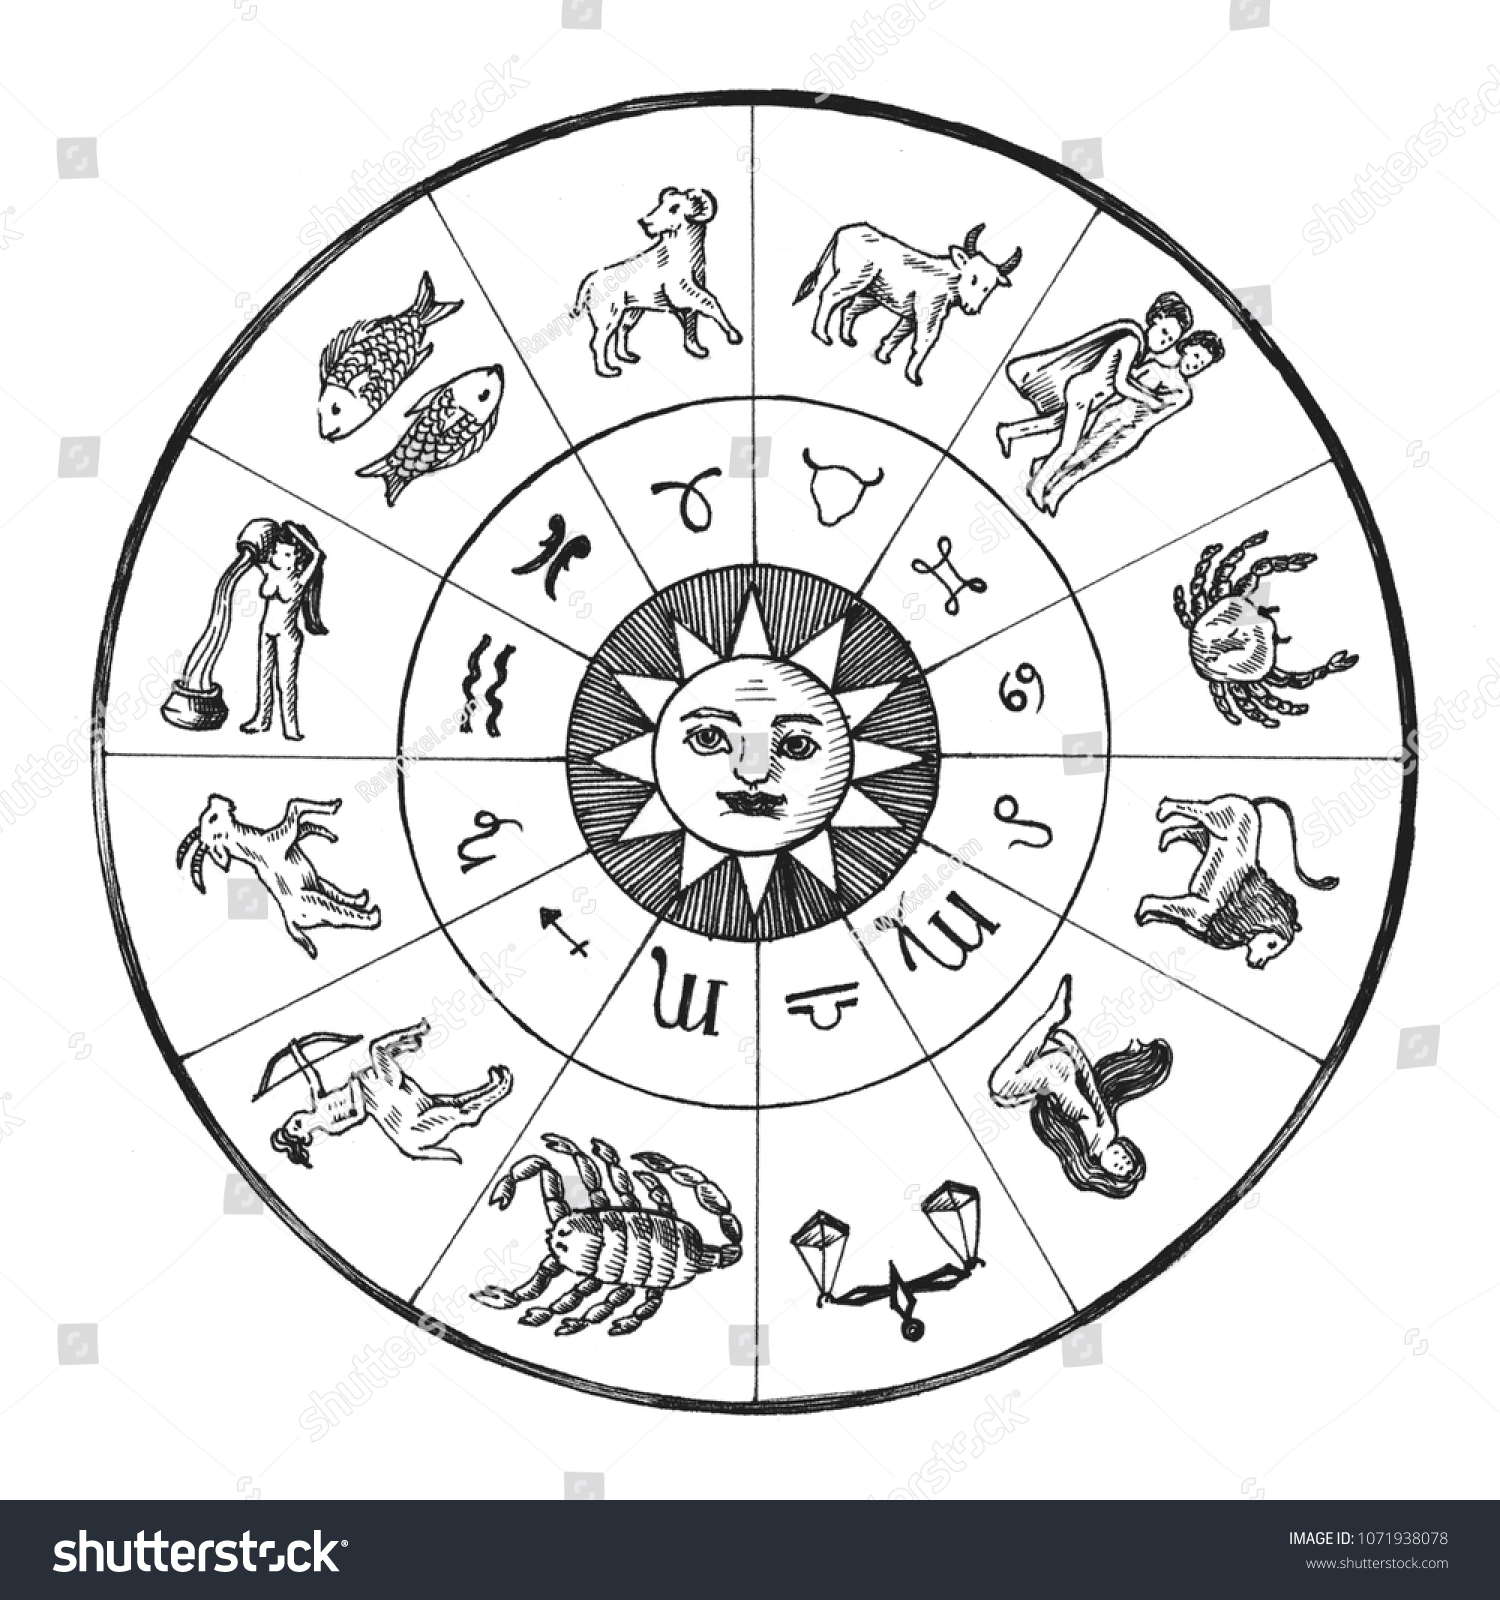 Astrology Chart Vintage Style Illustration Stock Illustration ...